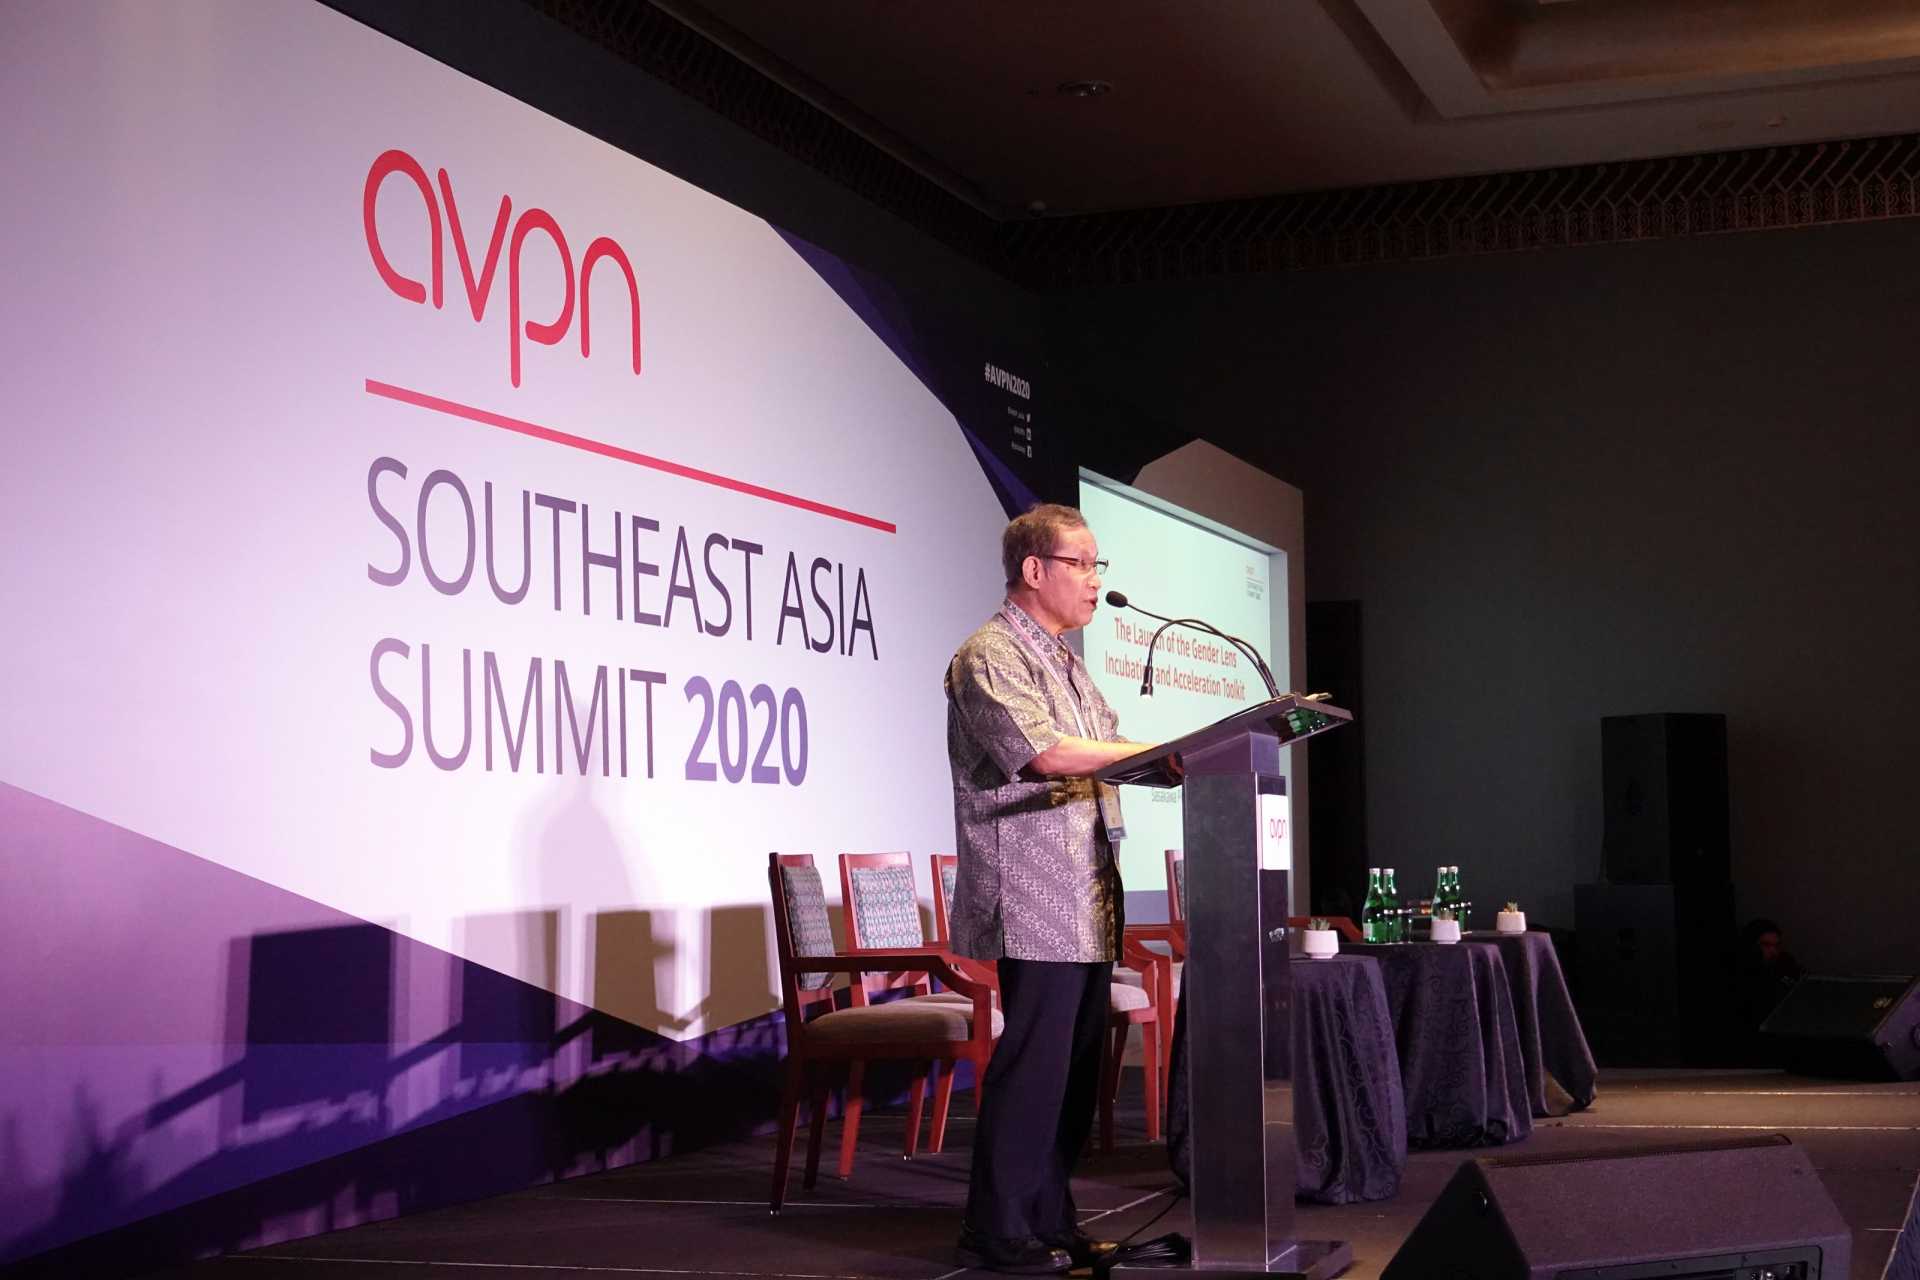 「AVPN東南アジアサミット」でGLIAツールキットを公表する当財団の大野修一理事長